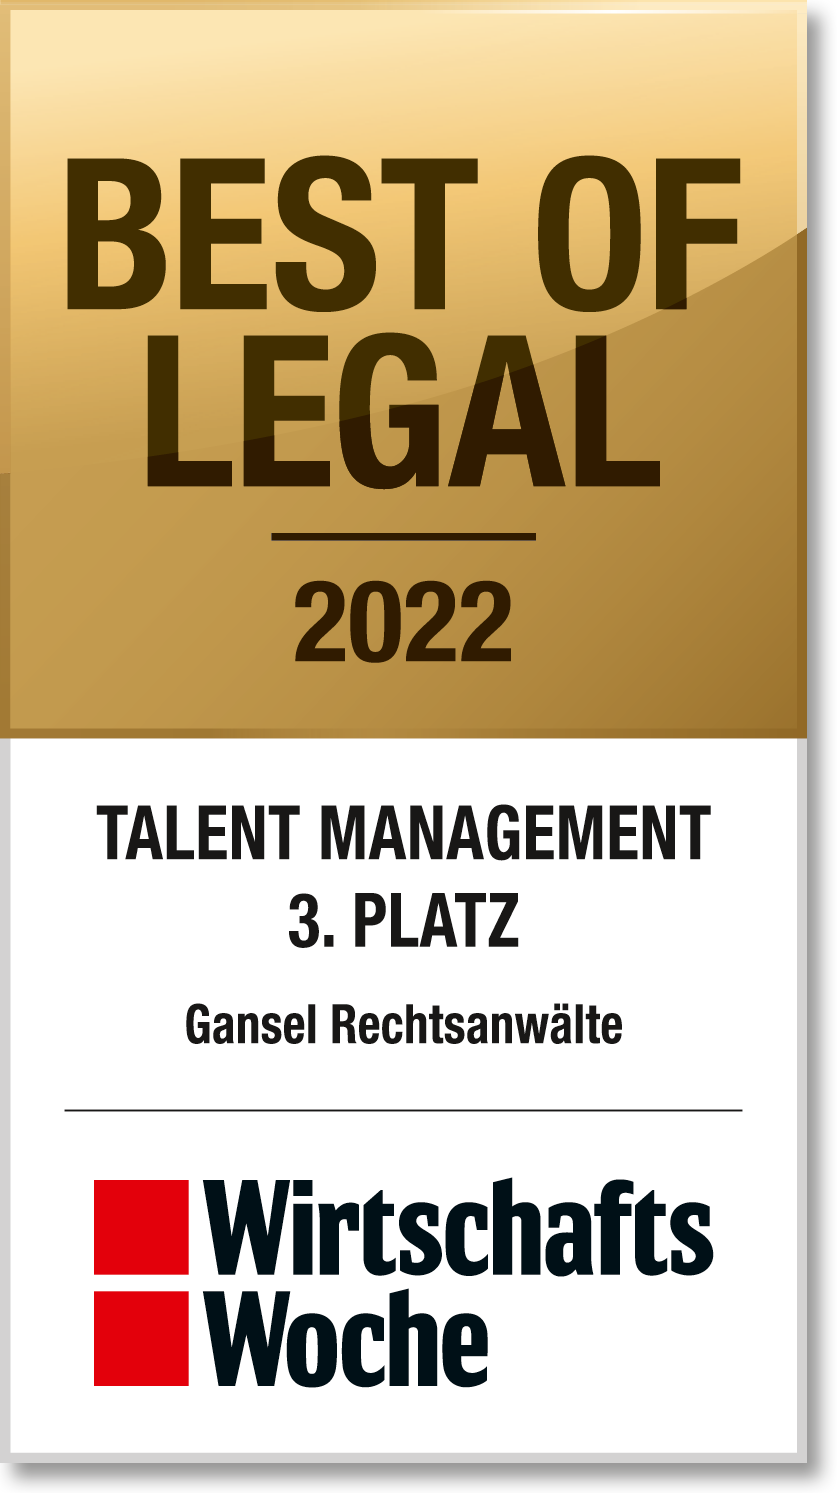 Best of Legal Award 2022: Talent Management